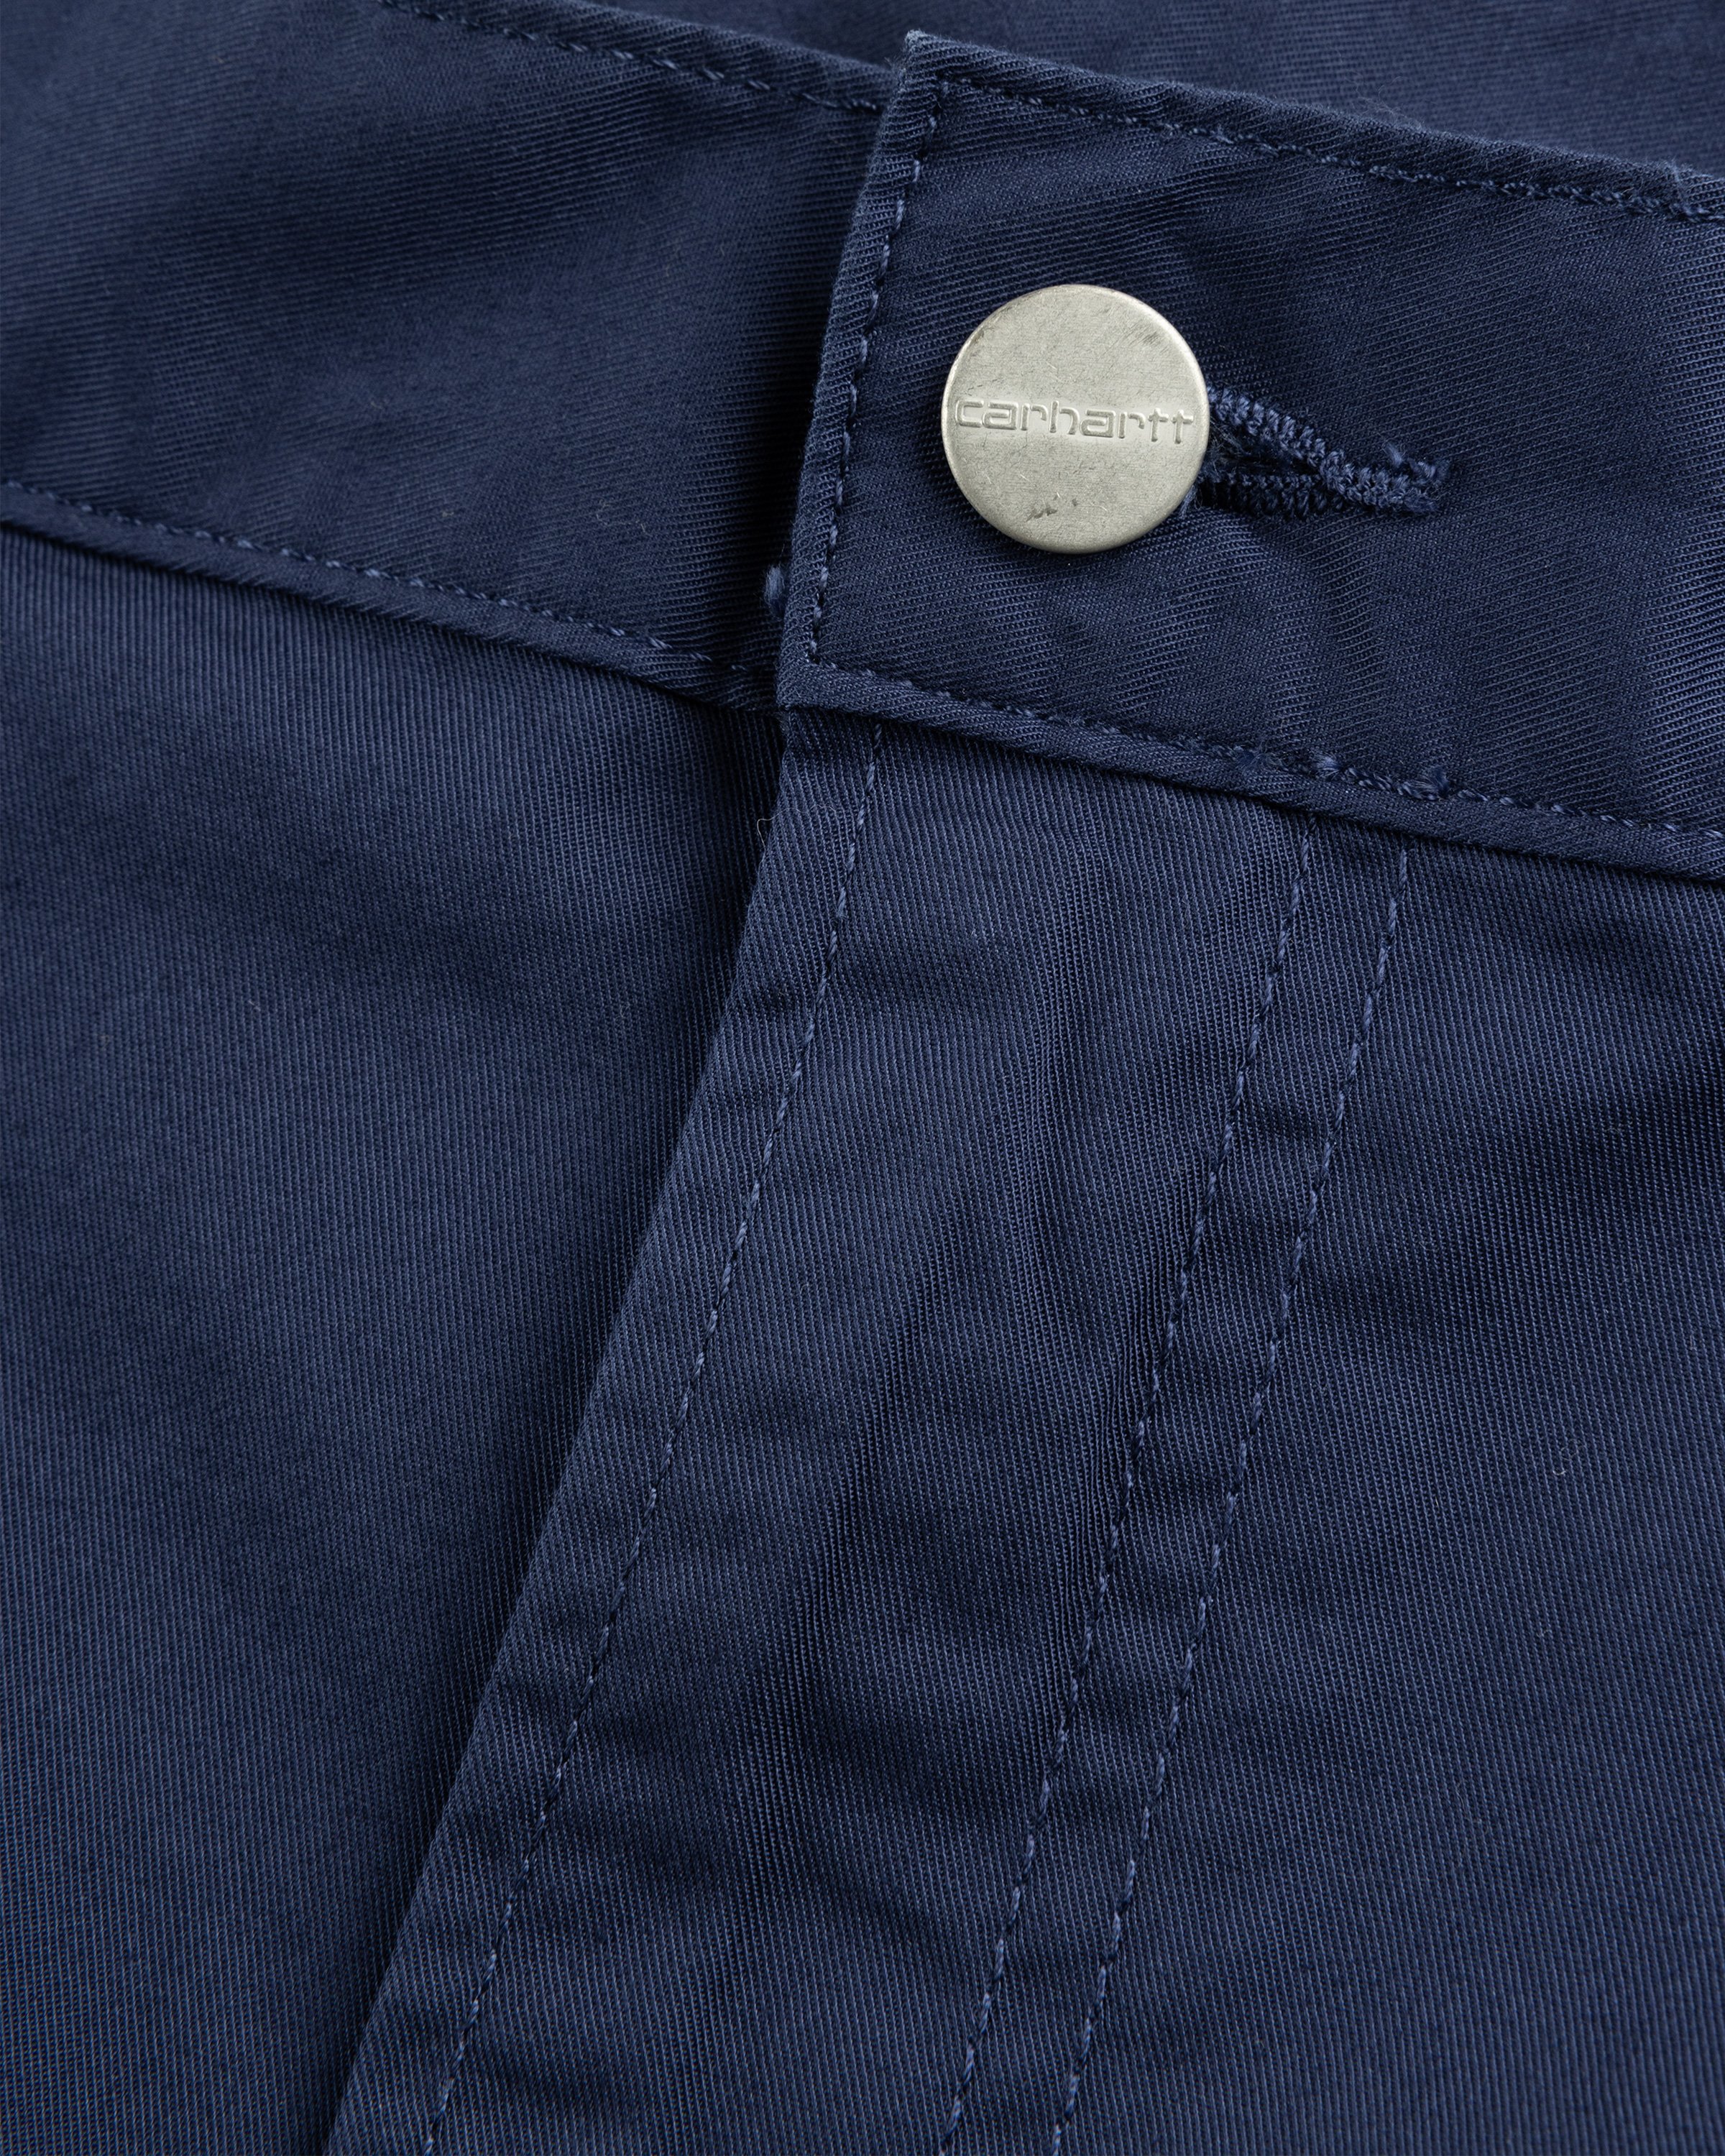 Carhartt WIP - Albert Short Blue /rinsed - Clothing - Blue - Image 7